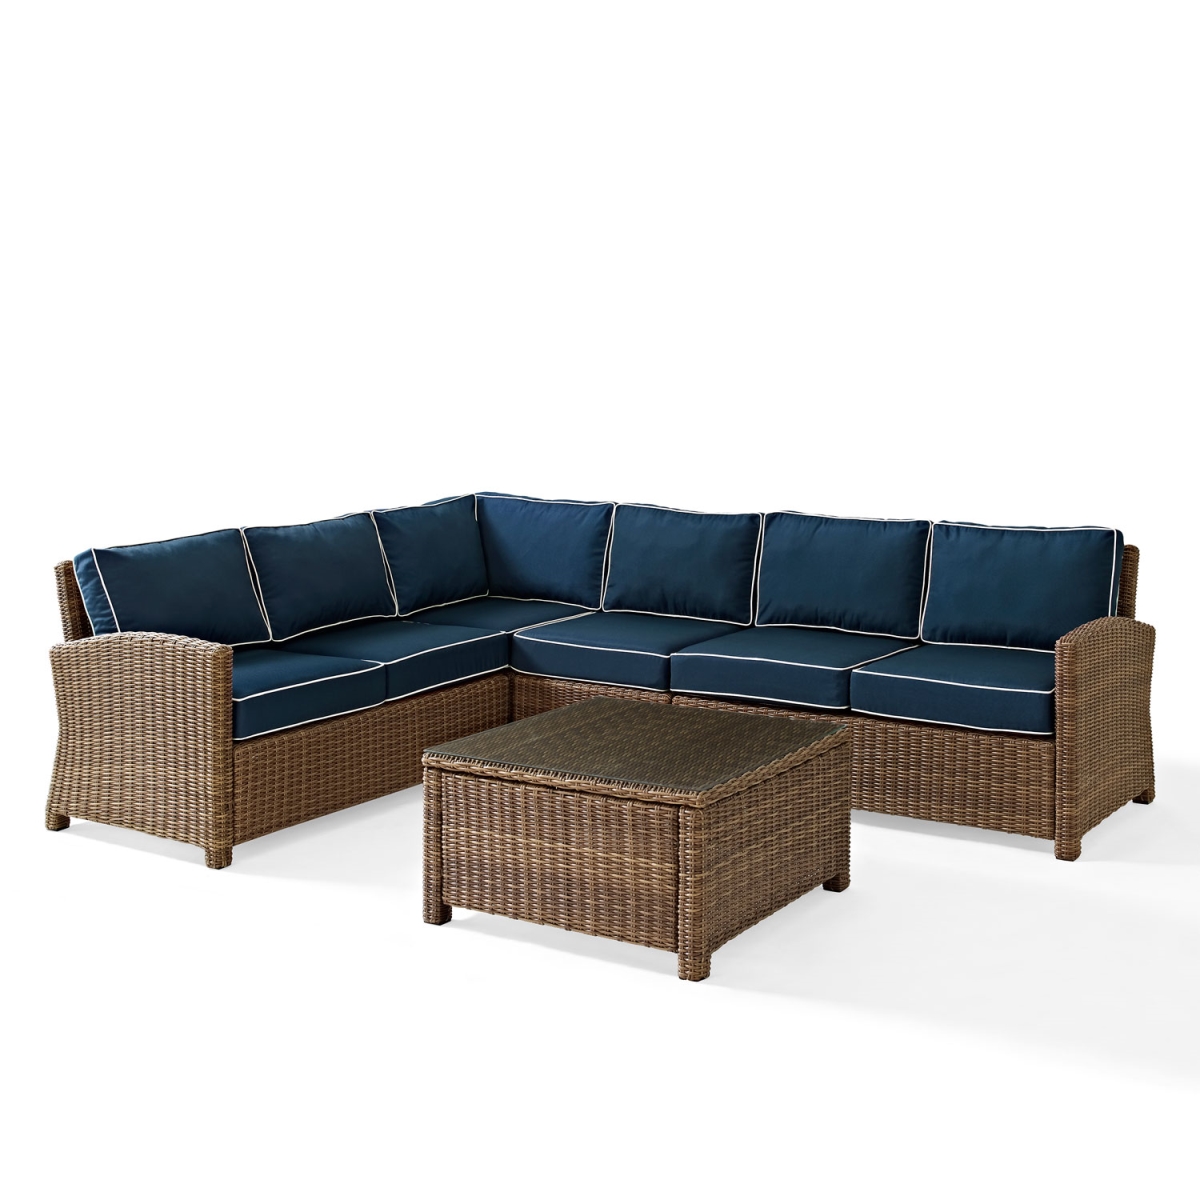 Ko70158-nv 5 Piece Bradenton Outdoor Wicker Seating Set With Navy Cushions - Weathered Brown